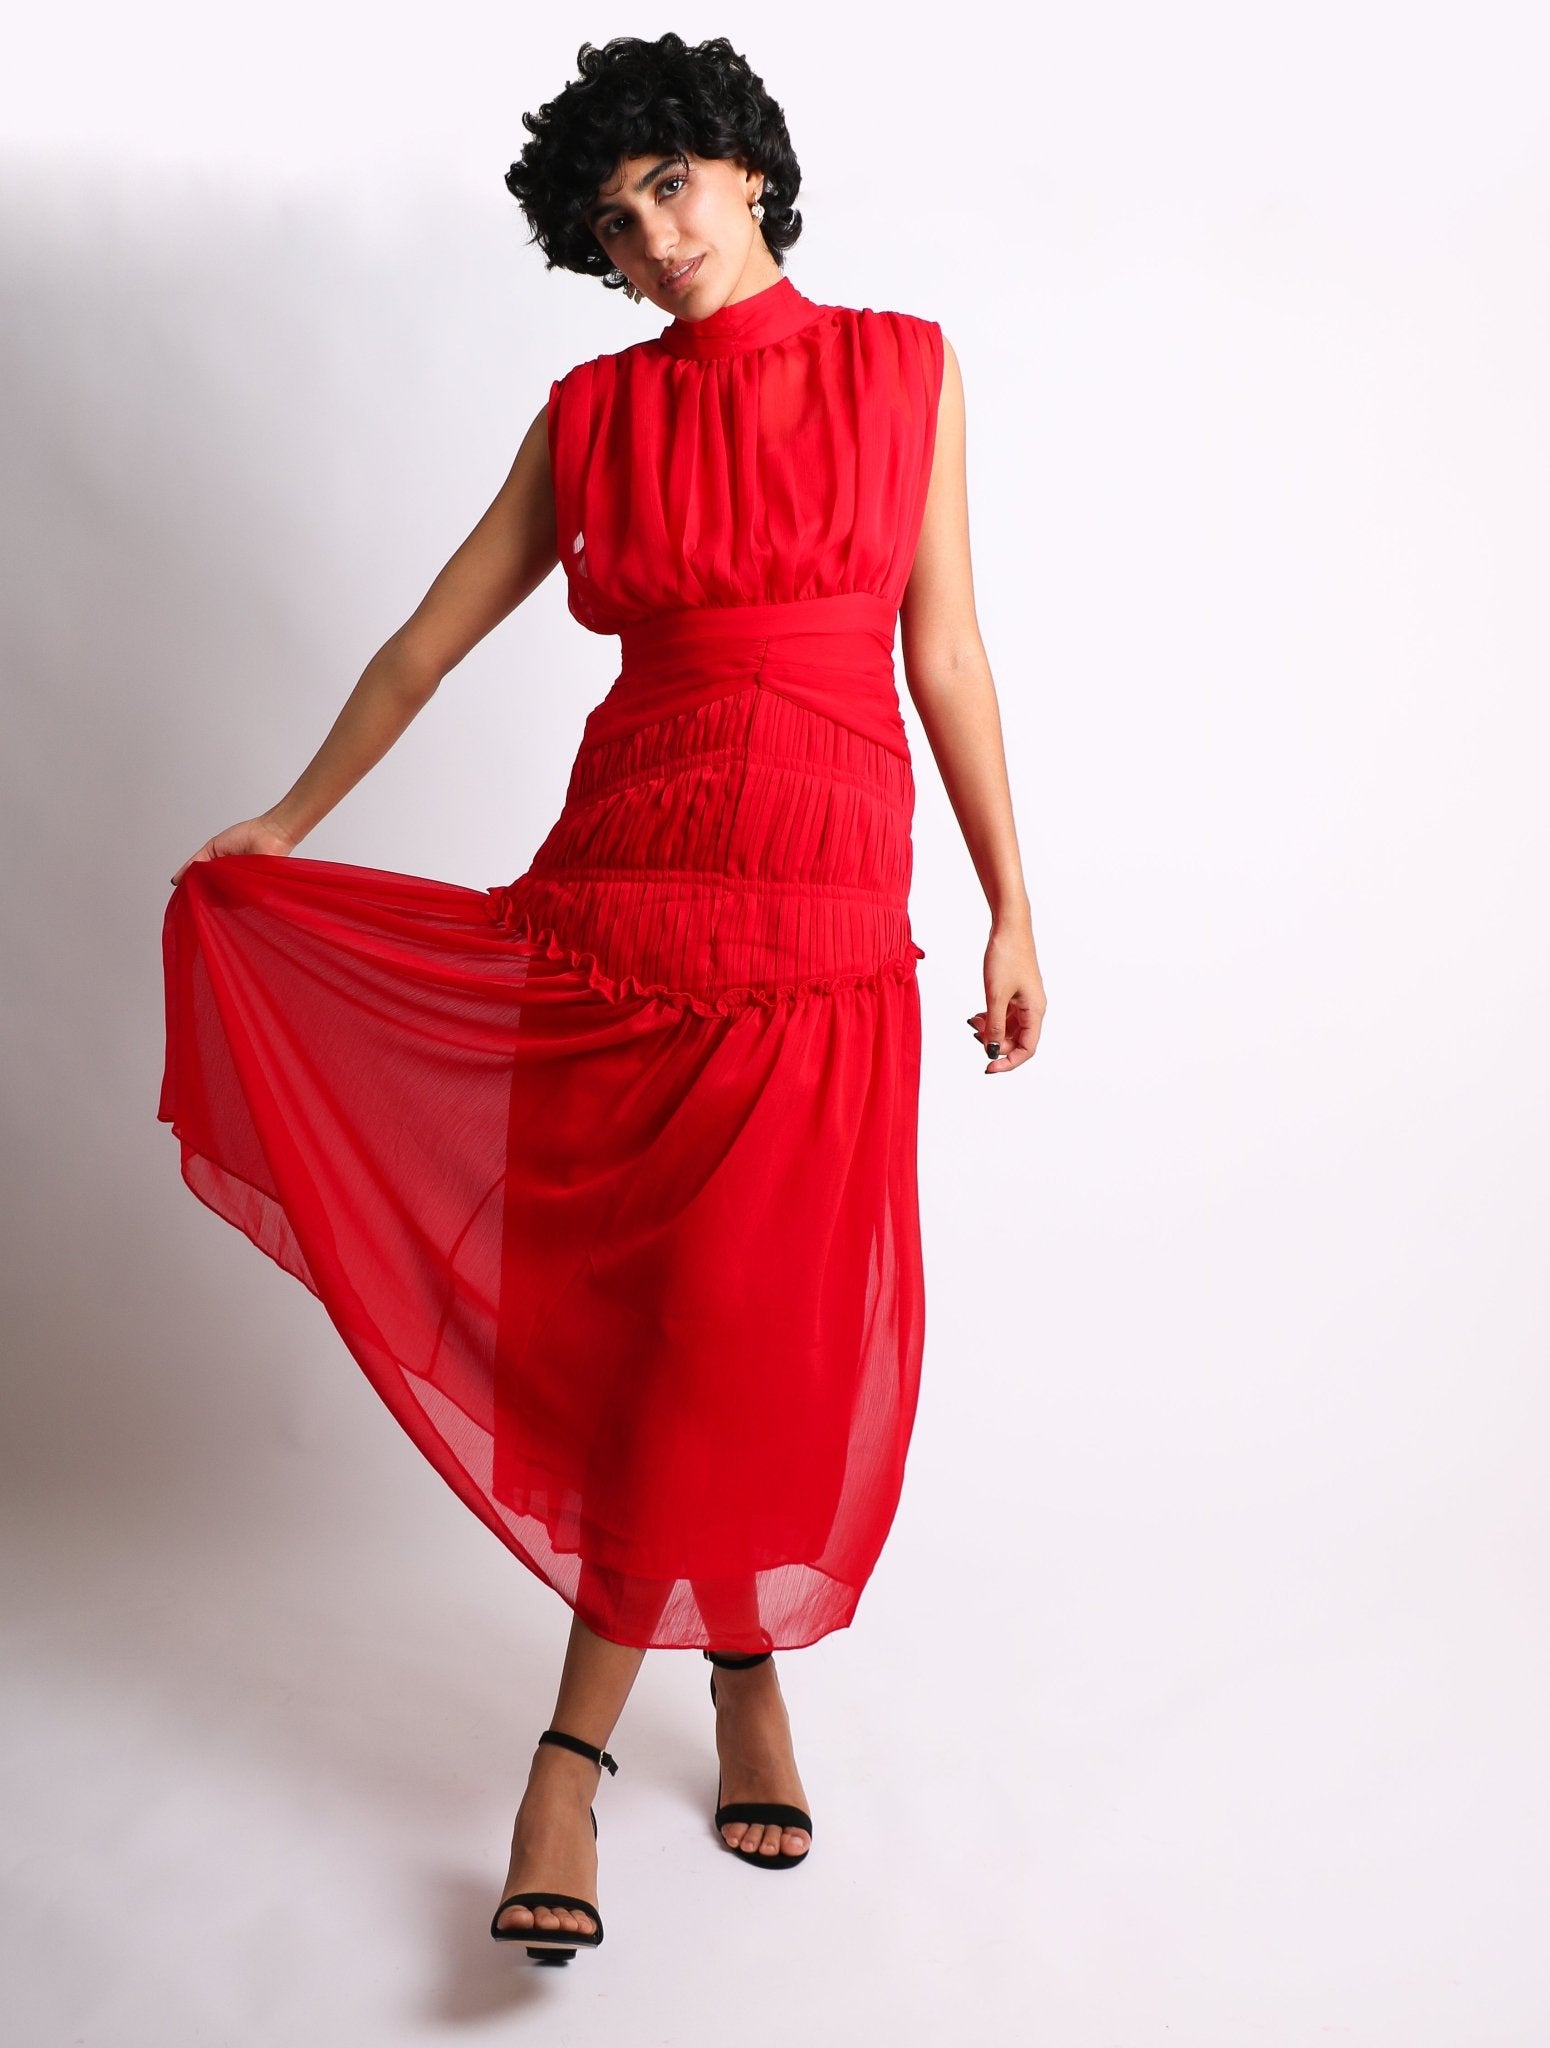 Elvira - rojo - Cindel vestidos maxi, midi, mini, para toda ocasion, largos, de fiesta, de boda